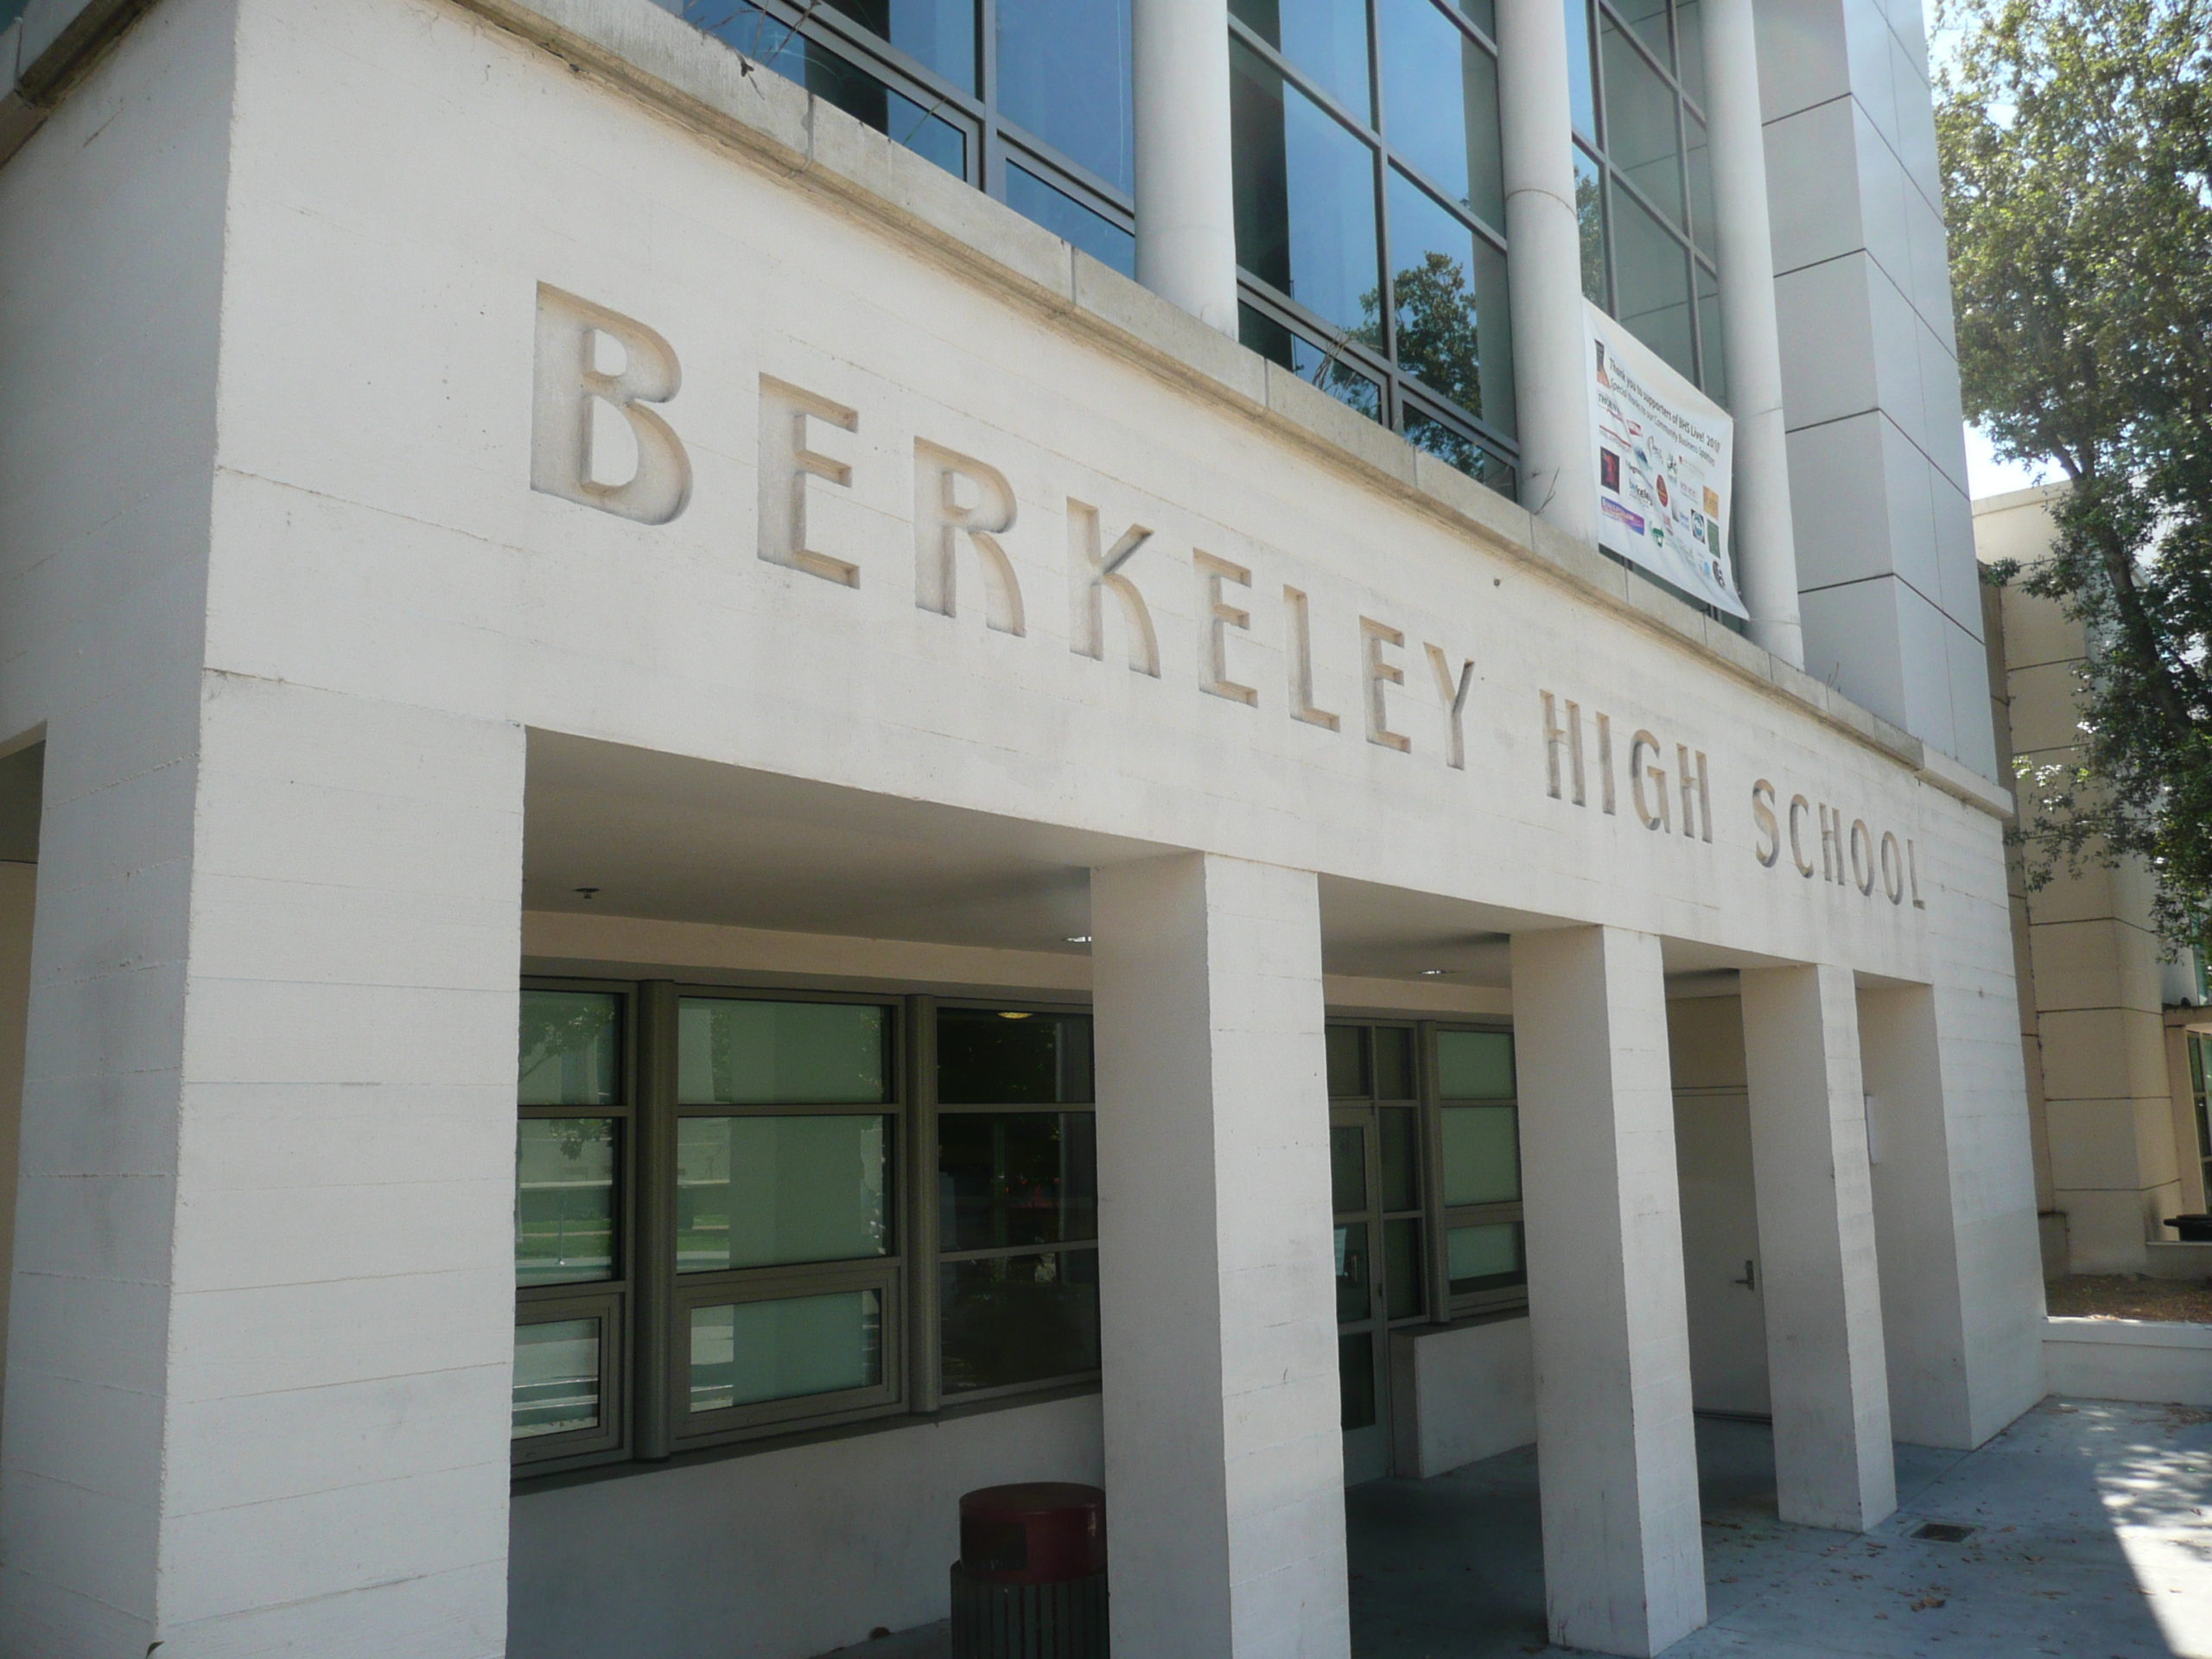 Berkeley High School Problems with chlorine